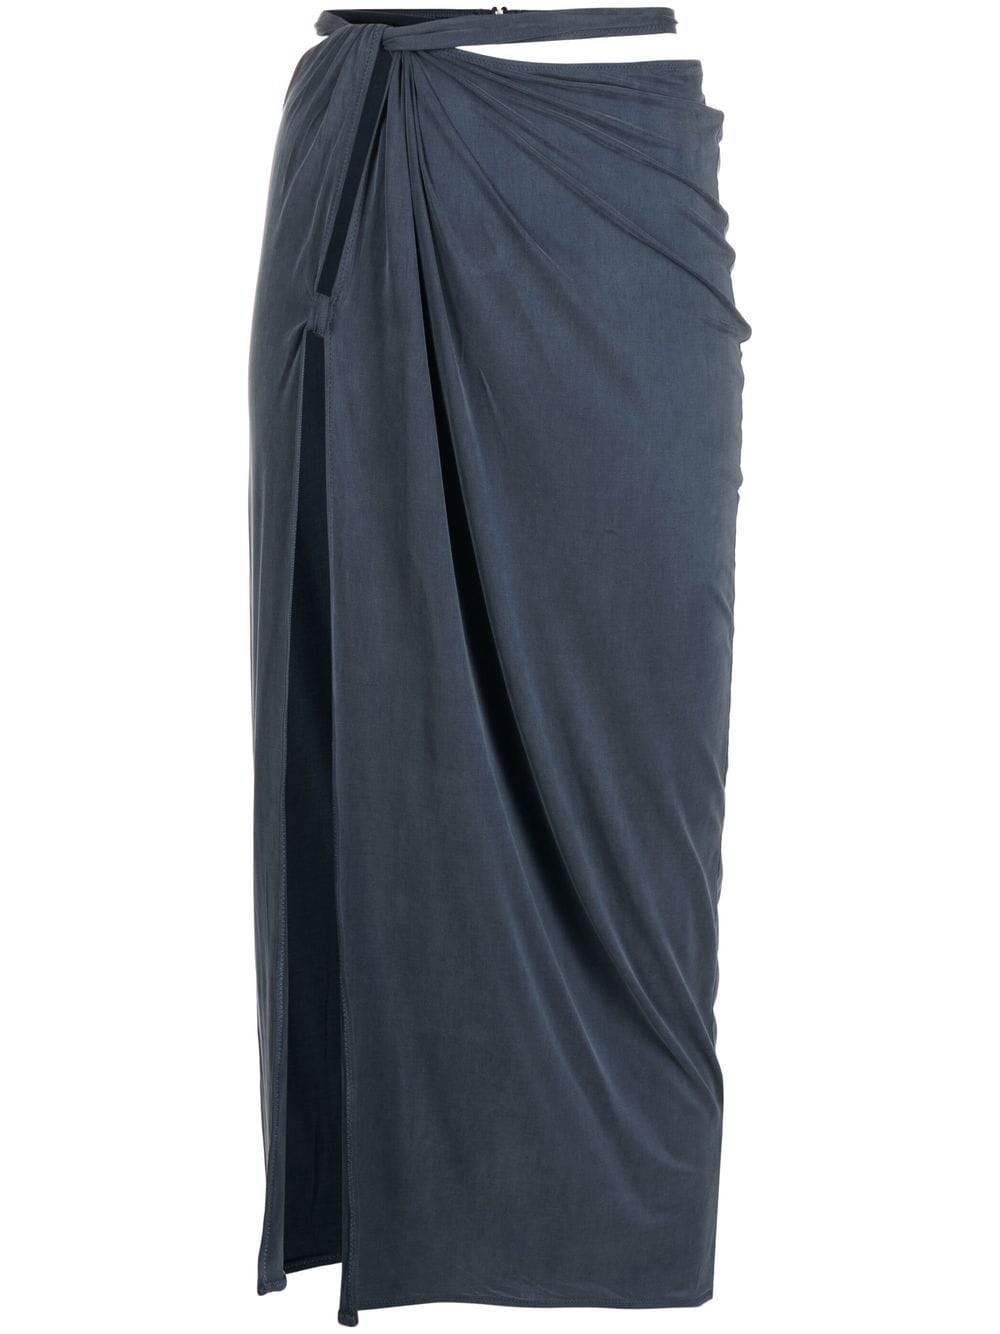 La jupe Espelho cut-out draped skirt - 1